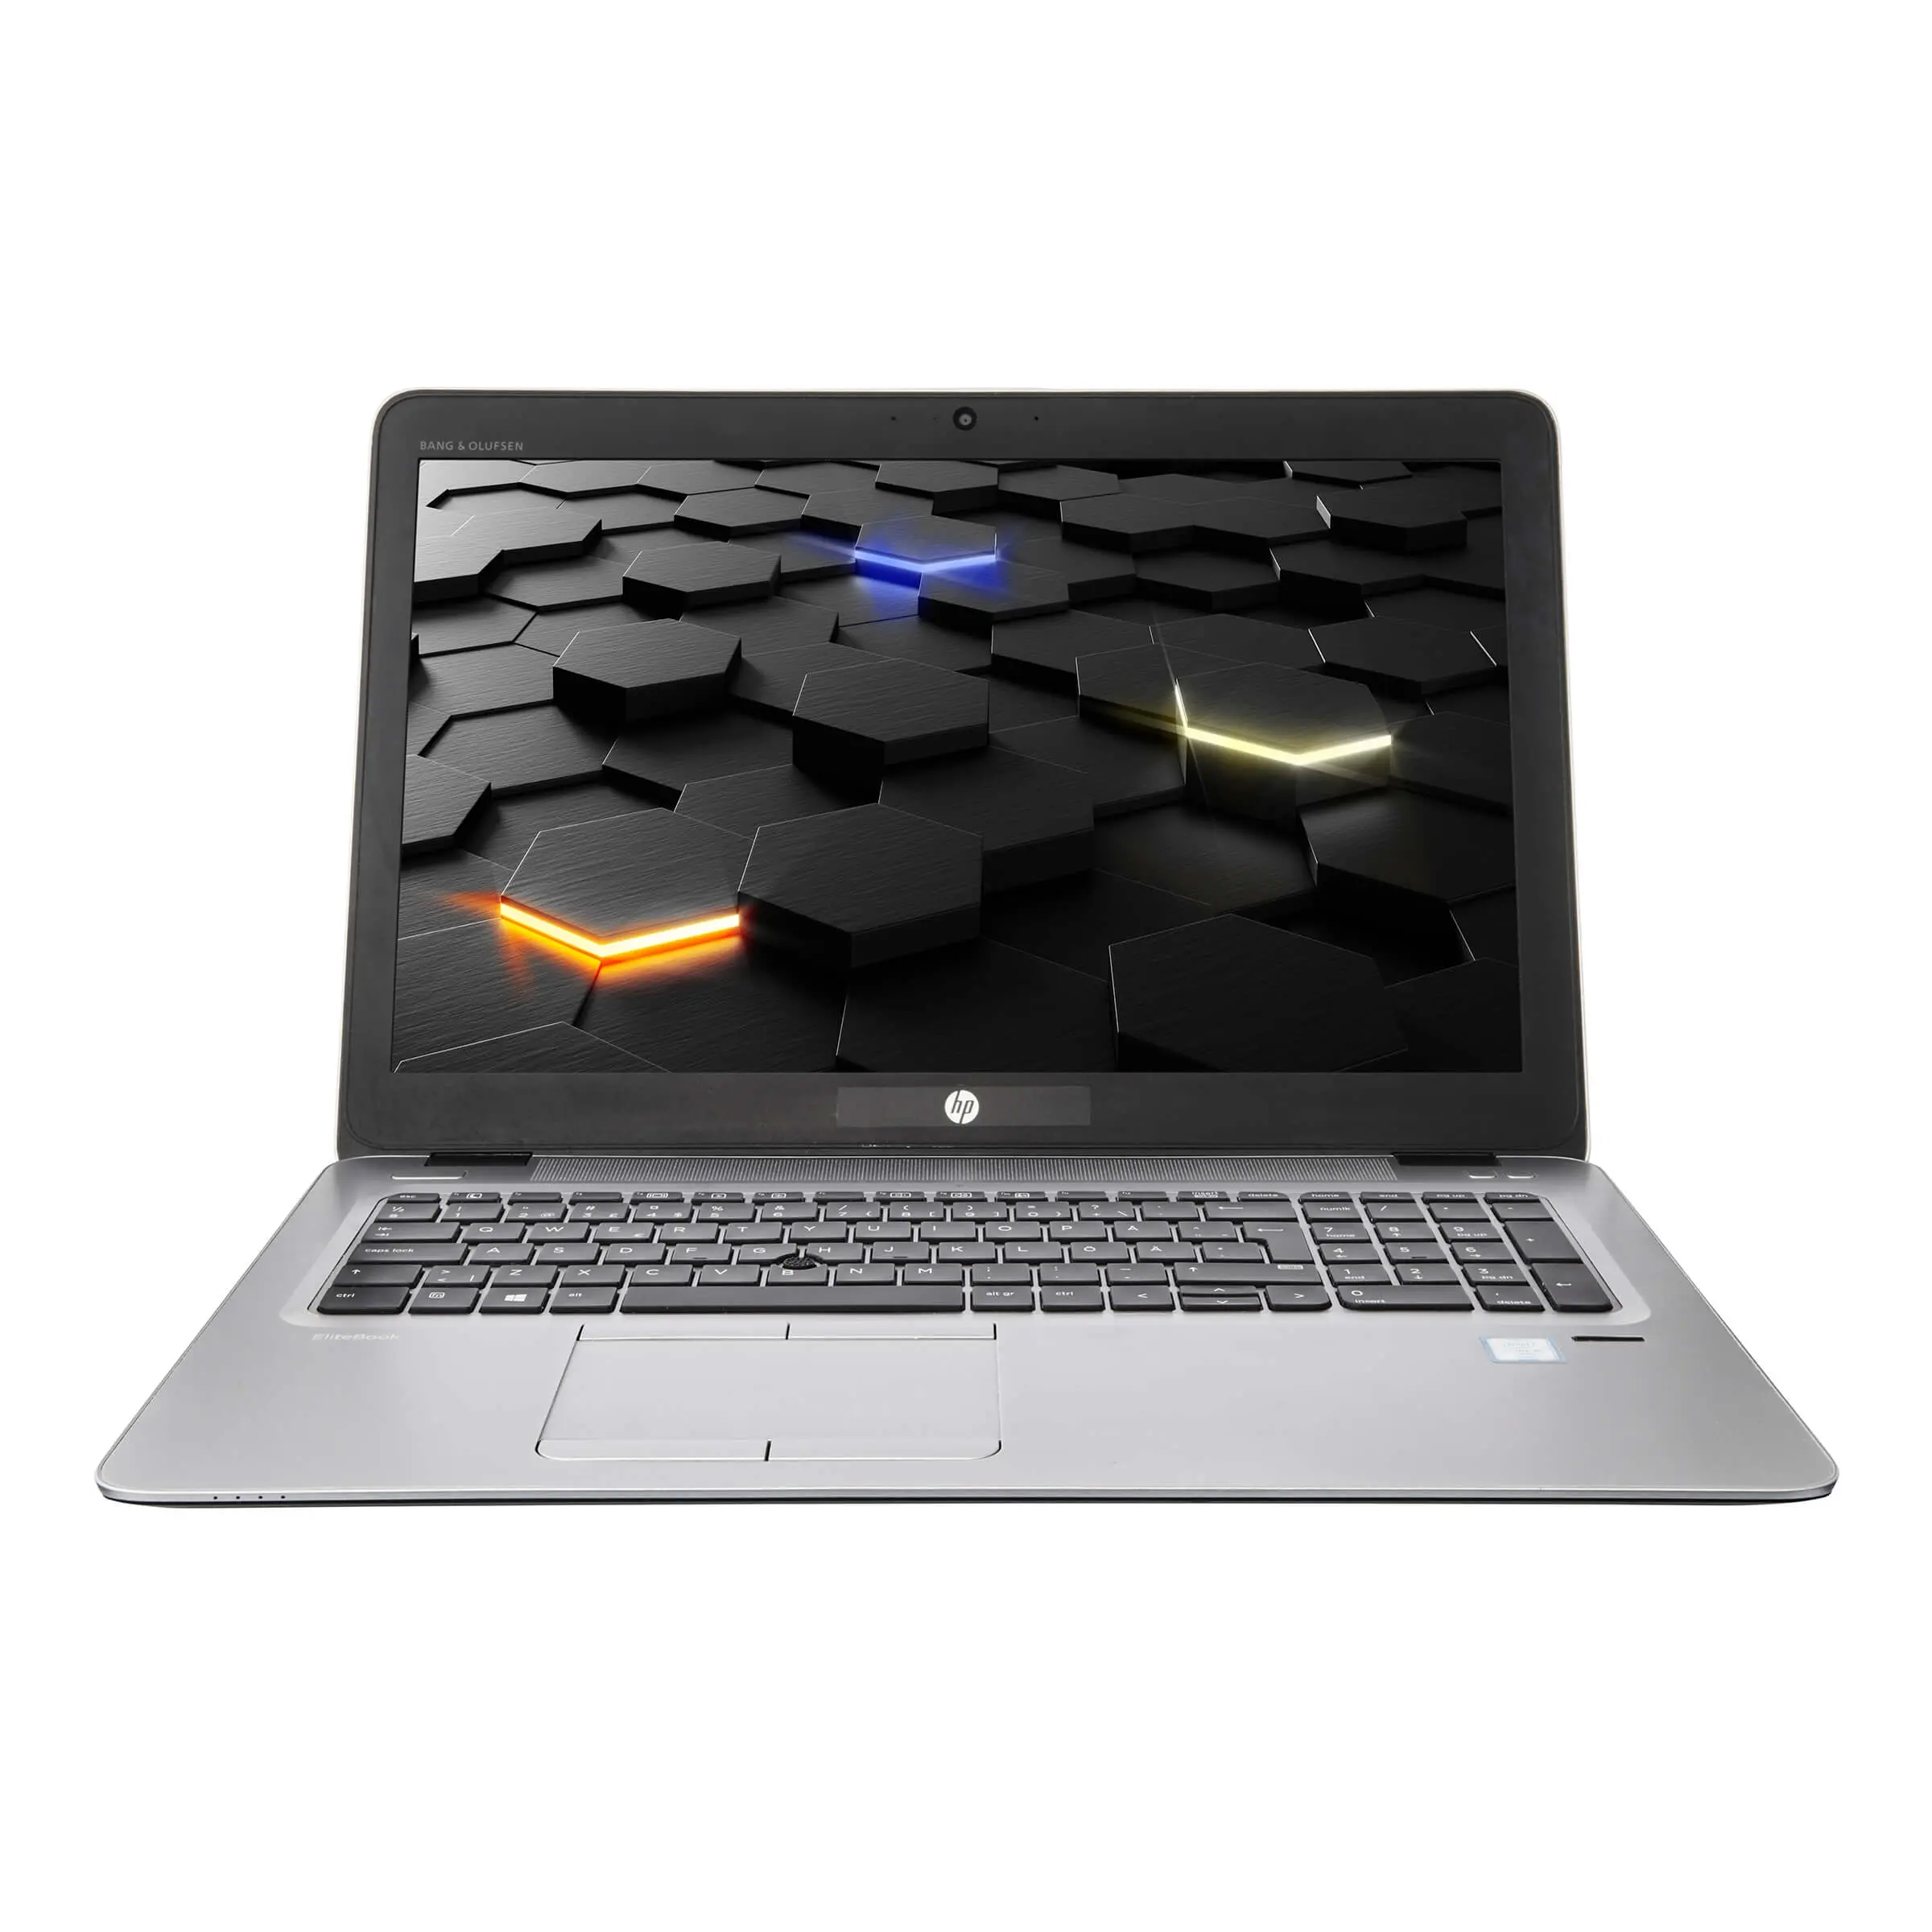 HP EliteBook 850 G3, i5, 15.6 Zoll Full-HD, 8GB, 250GB SSD + 1TB HDD, Webcam, Windows 10 Pro